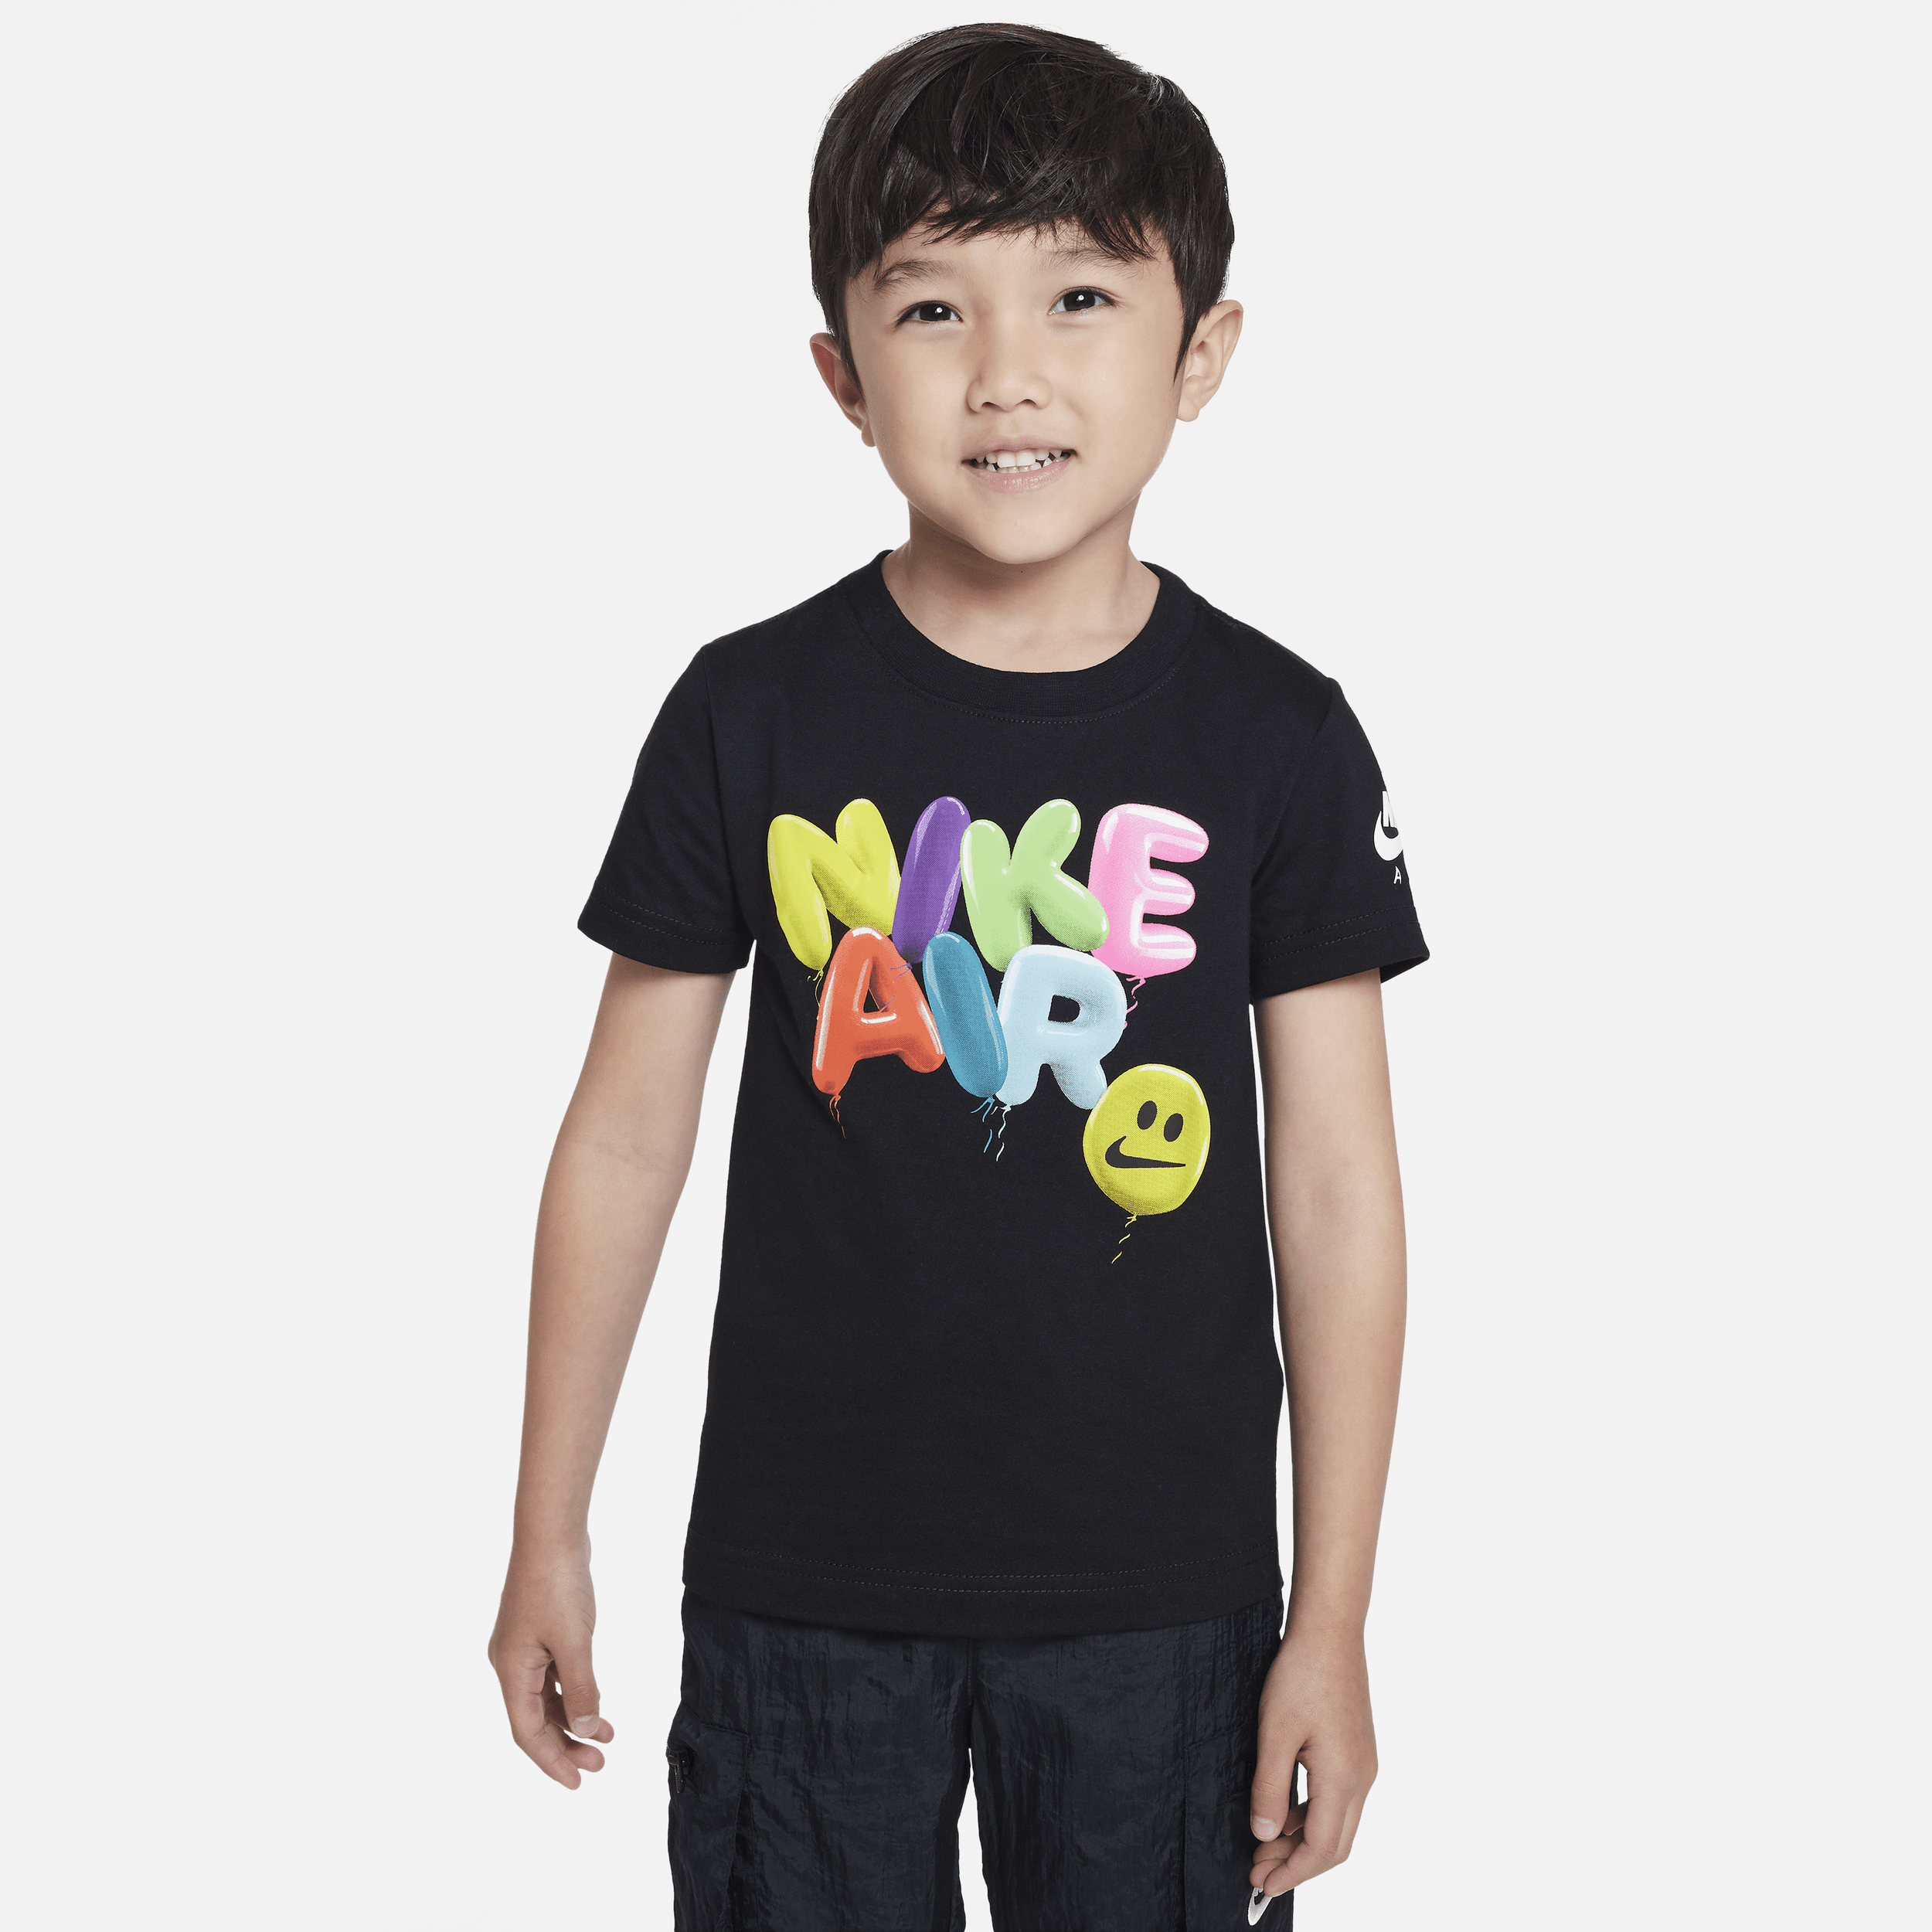 Nike Air Balloon Tee Camiseta - Niño/a pequeño/a - Negro